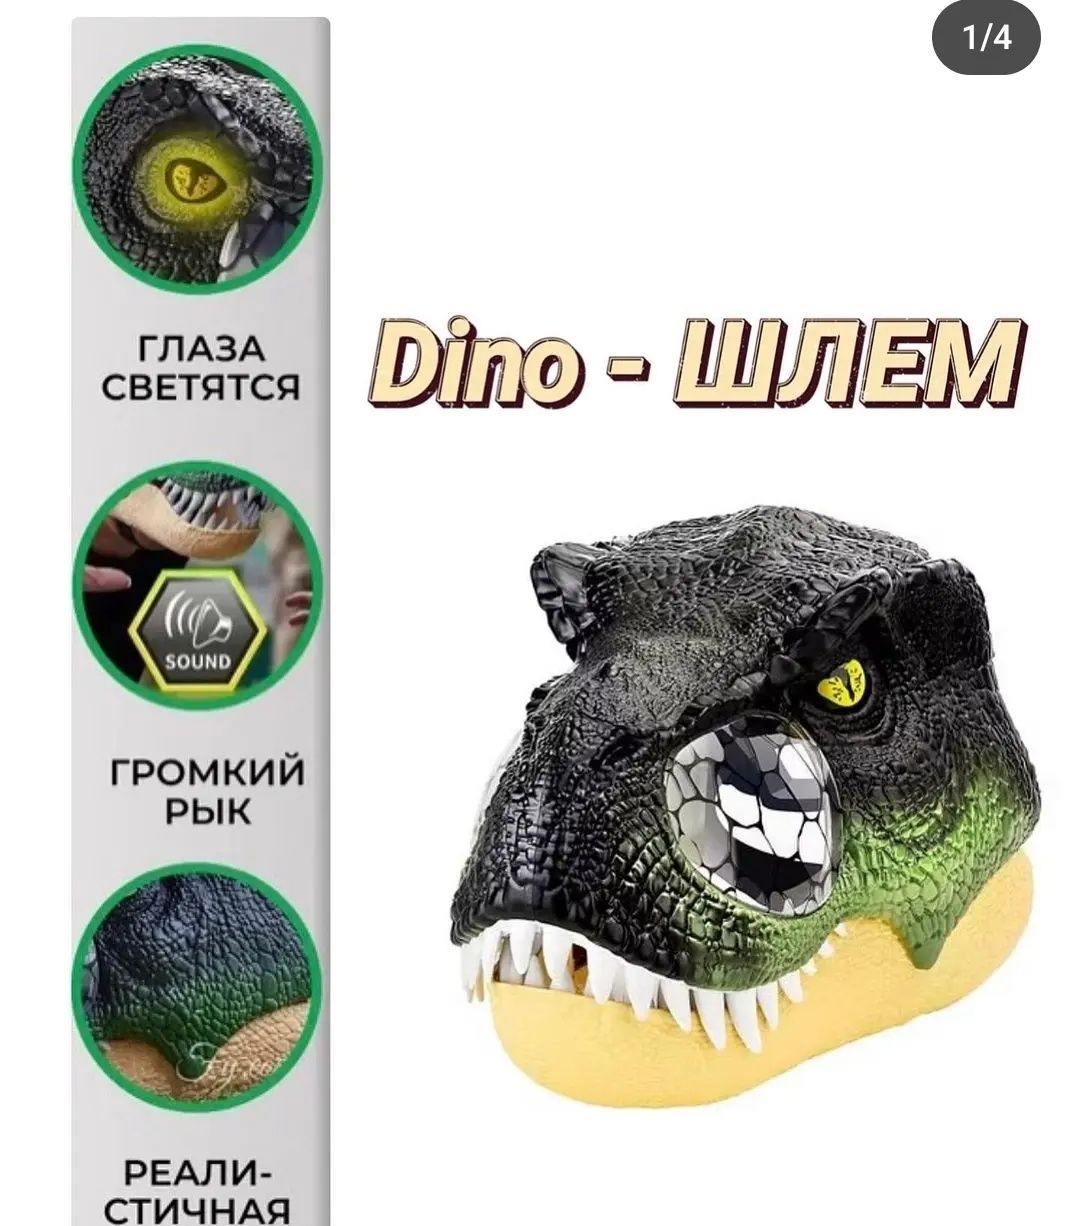 Дино шлем,маска динозавра